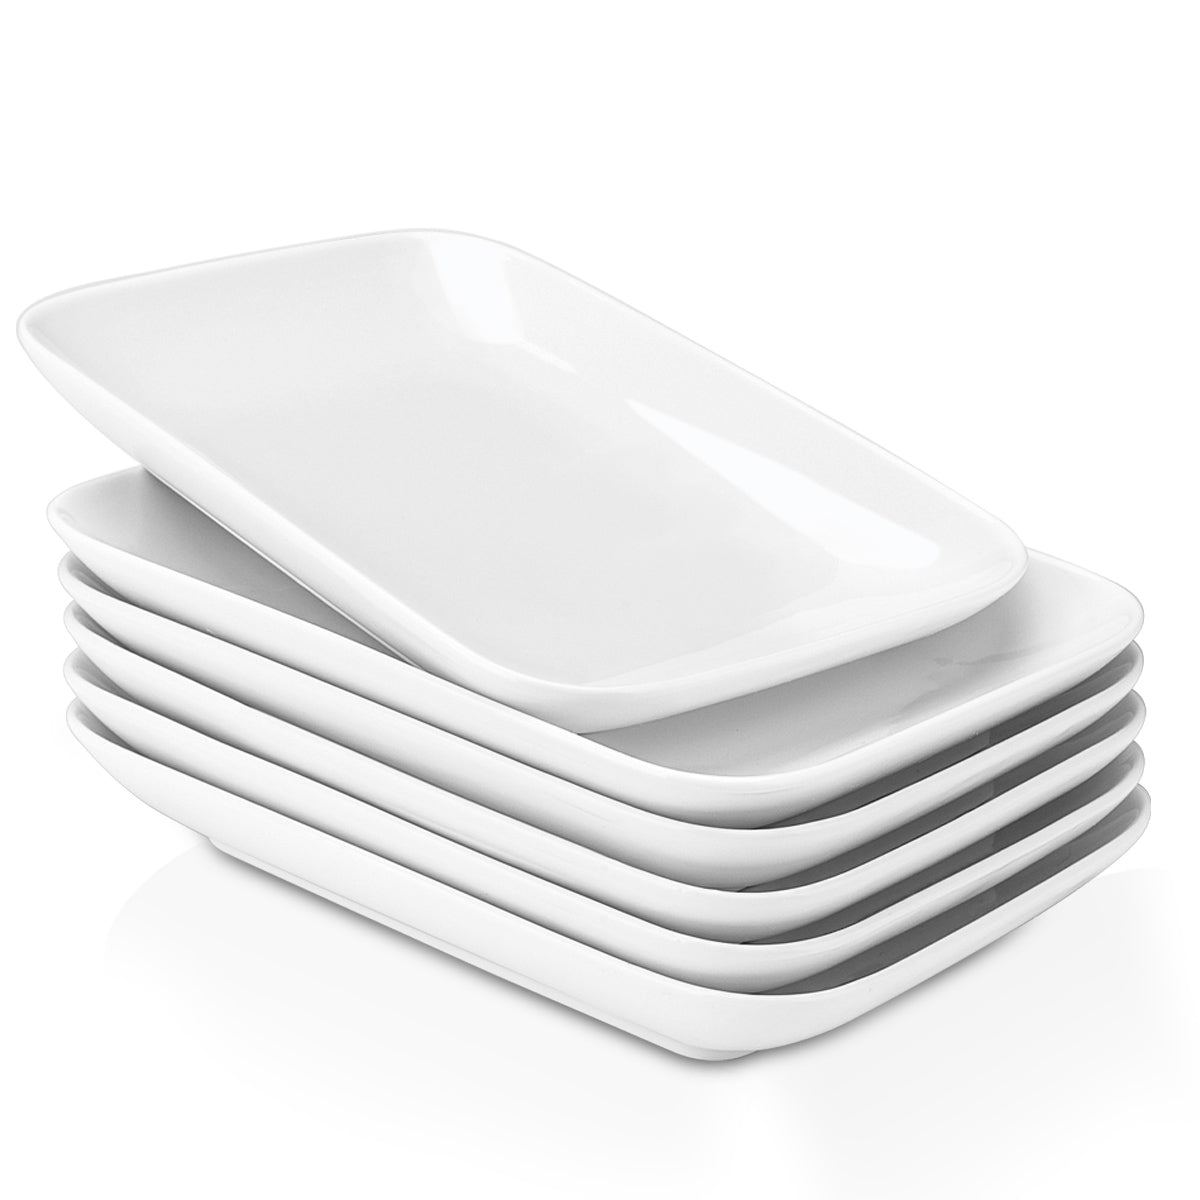 Delling 8 in Ultralight Porcelain Serving Platter/Plates, Fillet Small Serving Dishes for Fruit, Salad, Dessert and More [Microwave Oven and Dishwasher Safe] - Set of 6, White